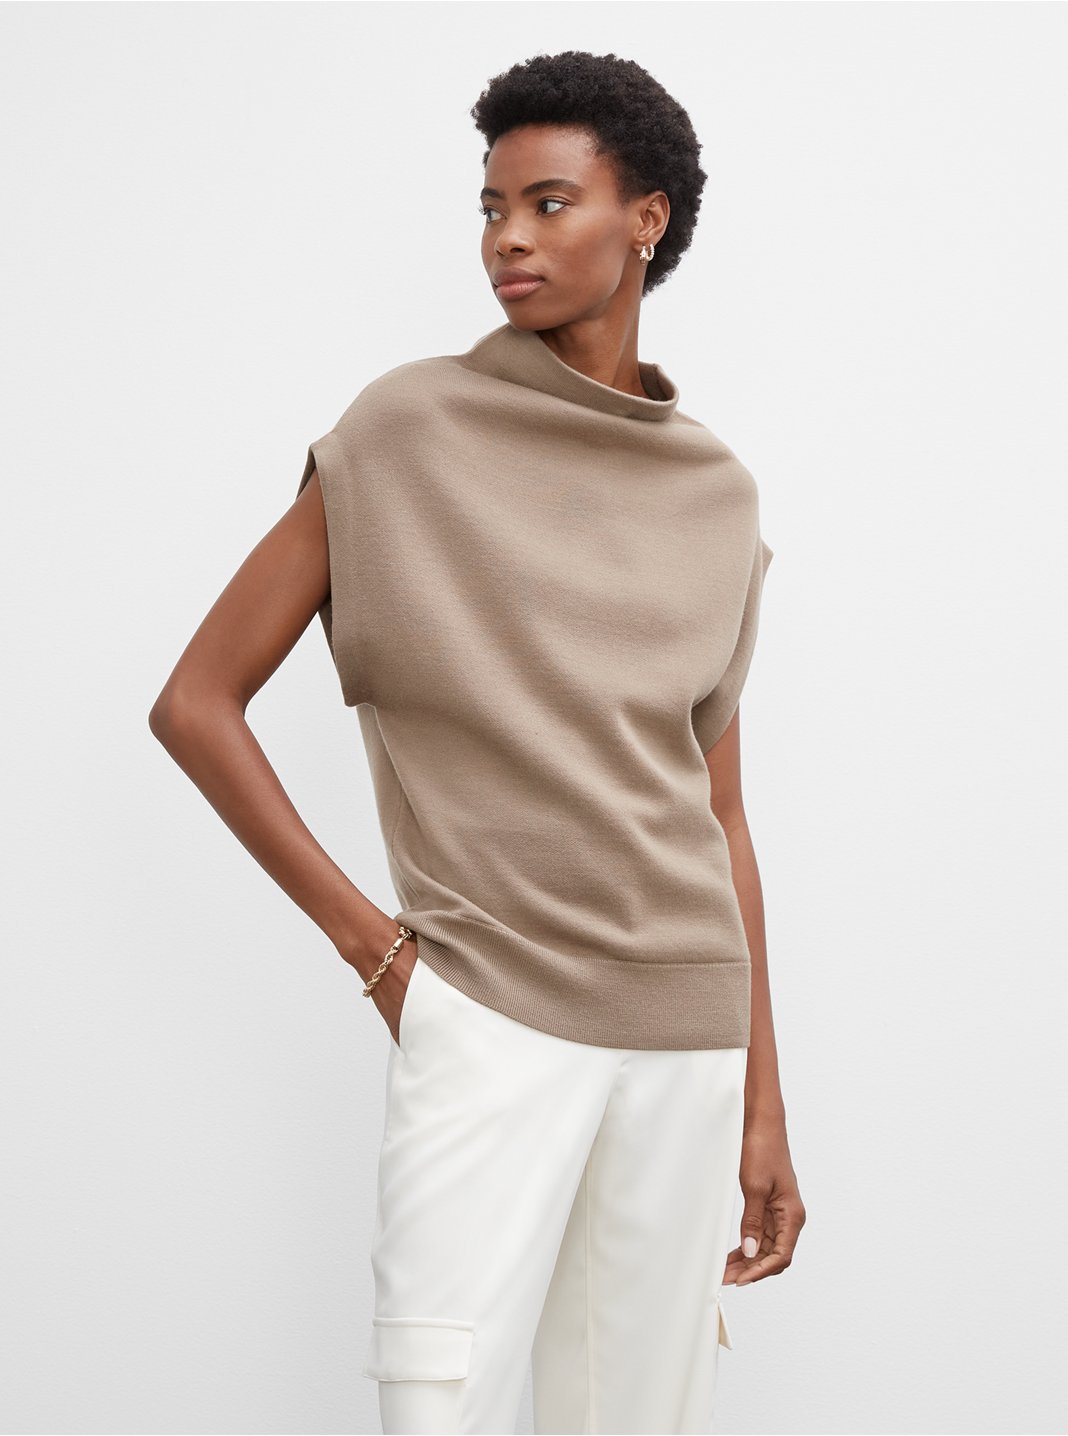 new CLUB MONACO stretch merino wool blend knitted sweater burgundy size xs 